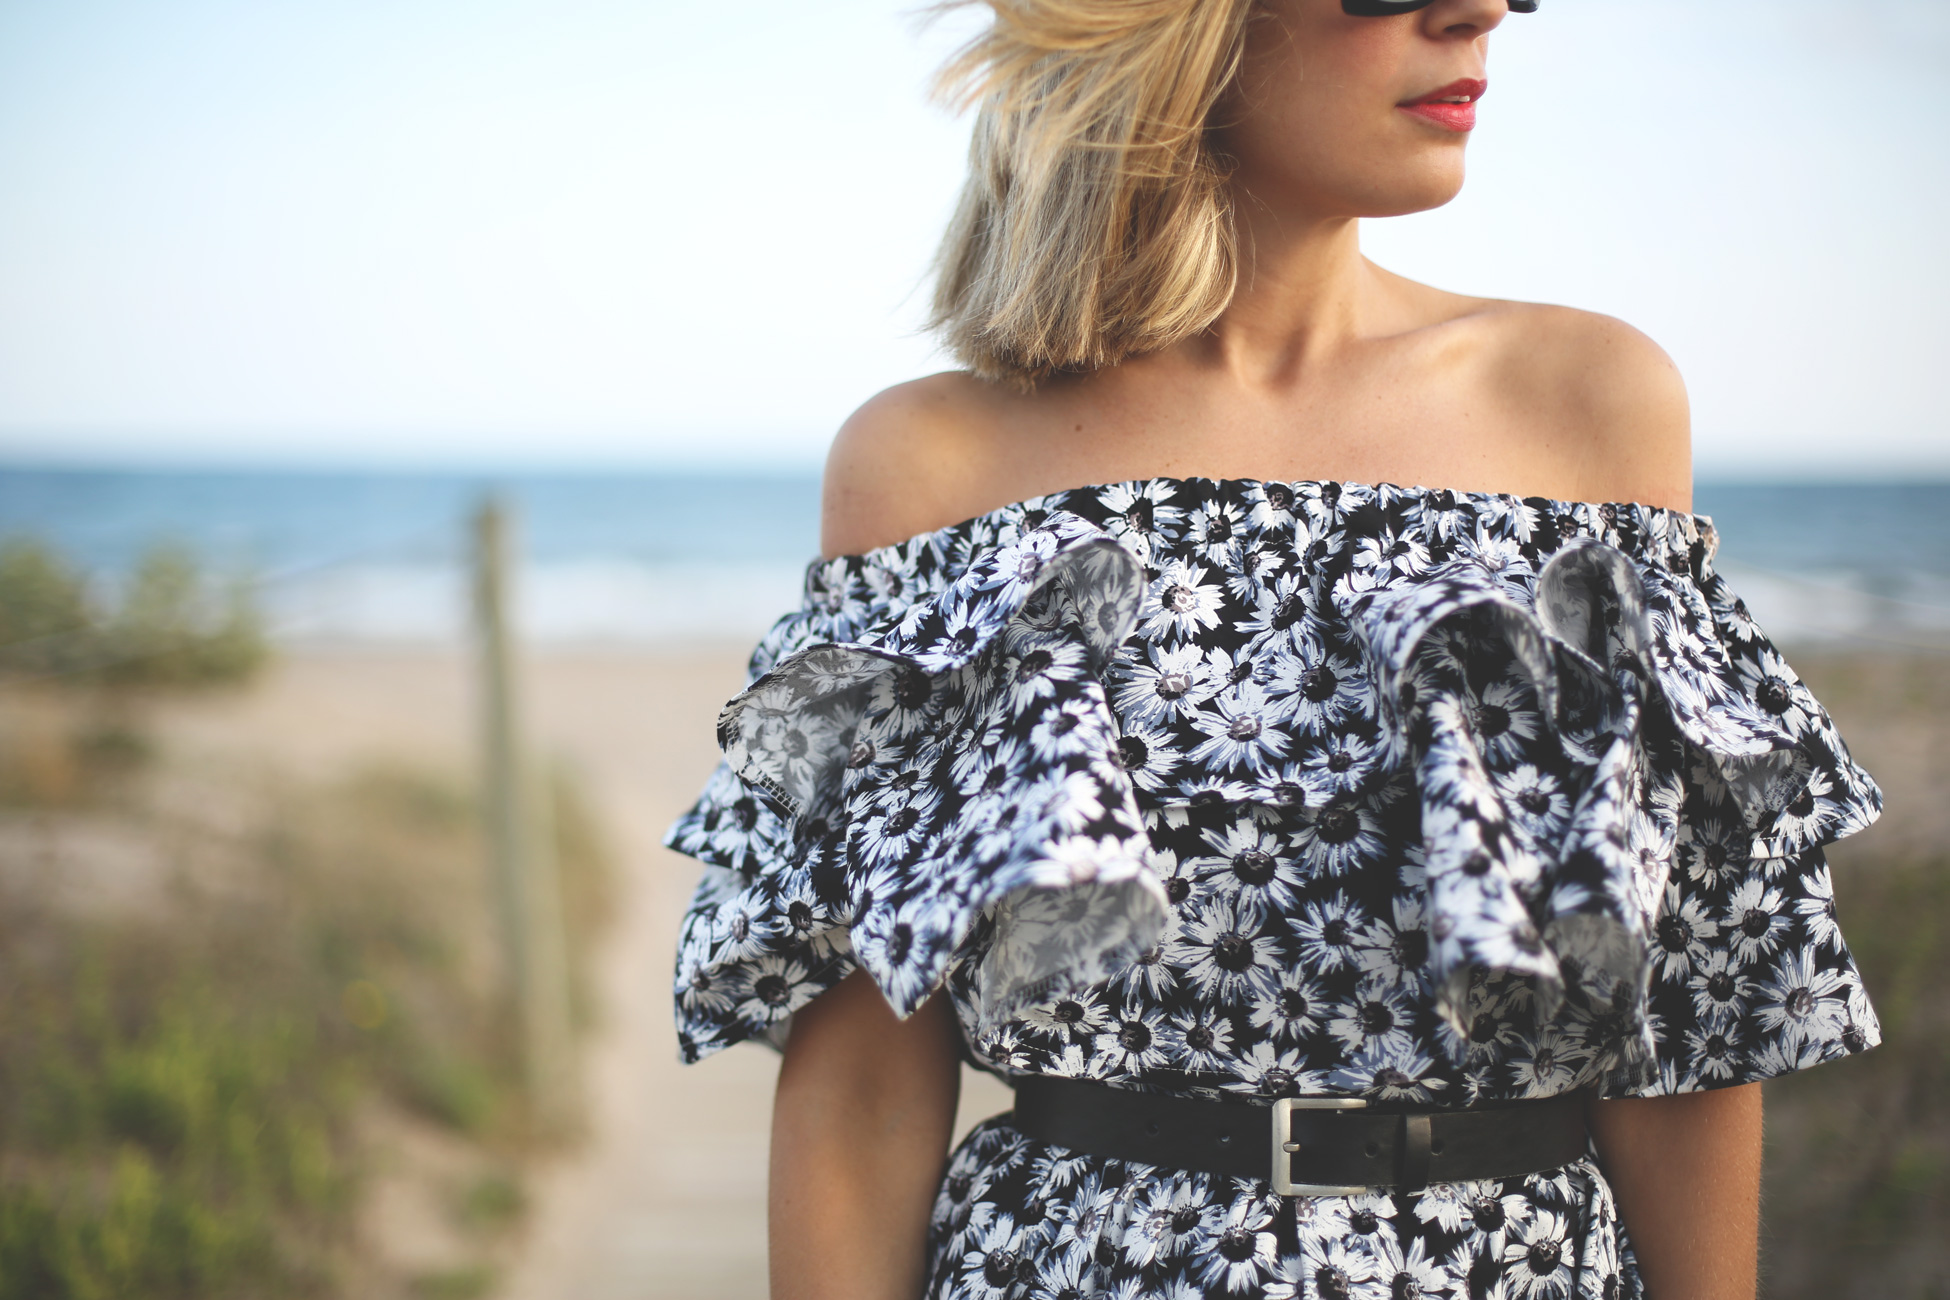 Dress, Summer 2014, Summer look, frill dress, floral print, sunglasses, outfit, black bag, Barbara Rihl, Off sohulder